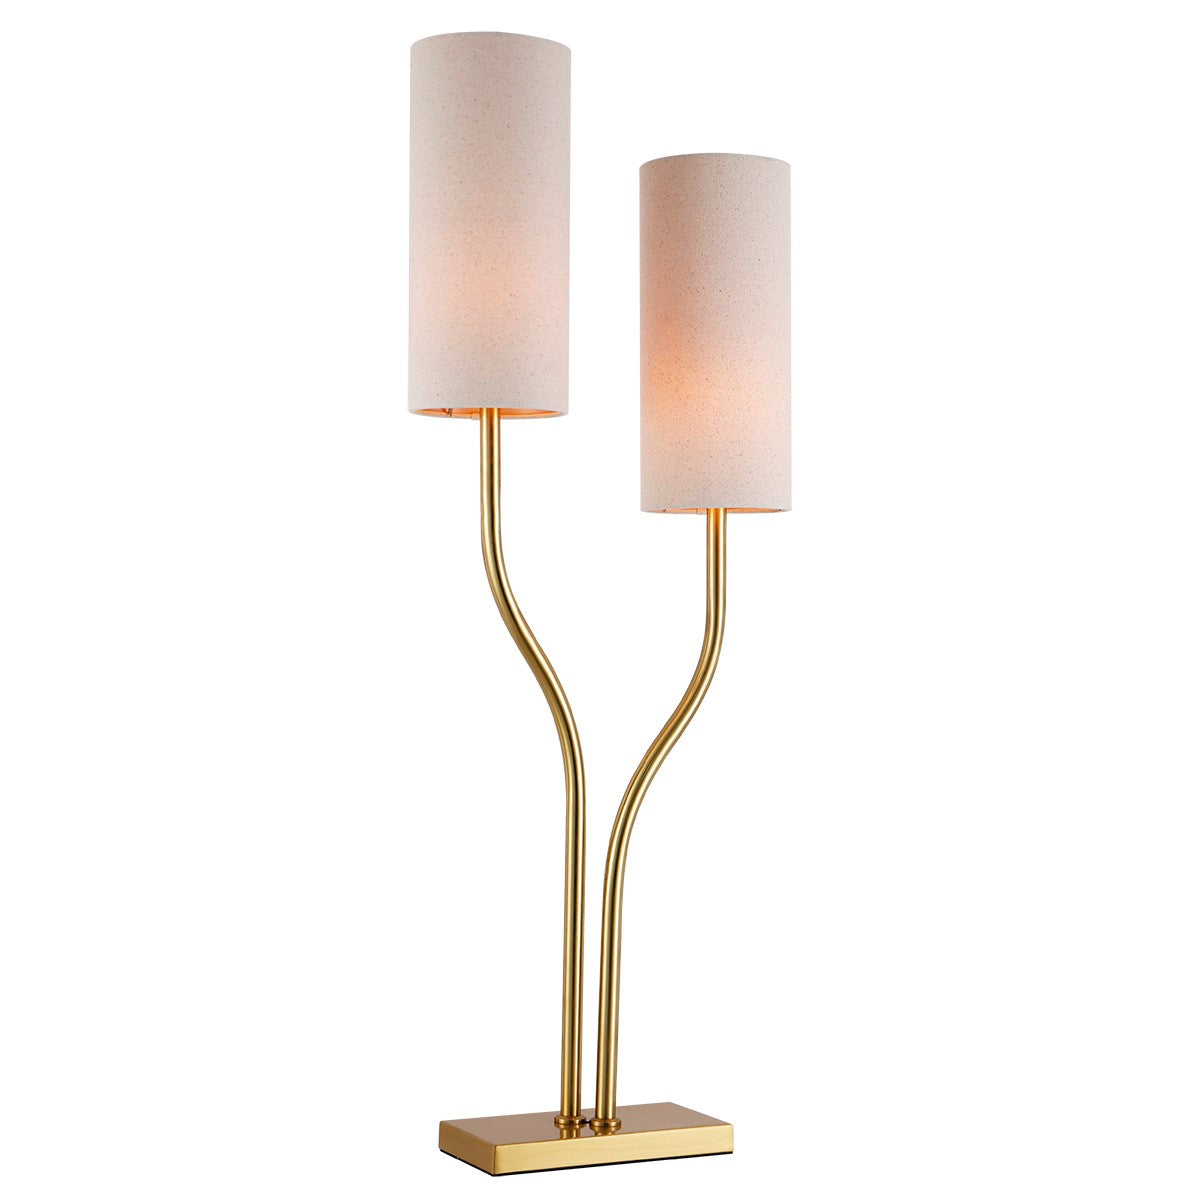 Pink lampshades, gold lamp, Table lamp